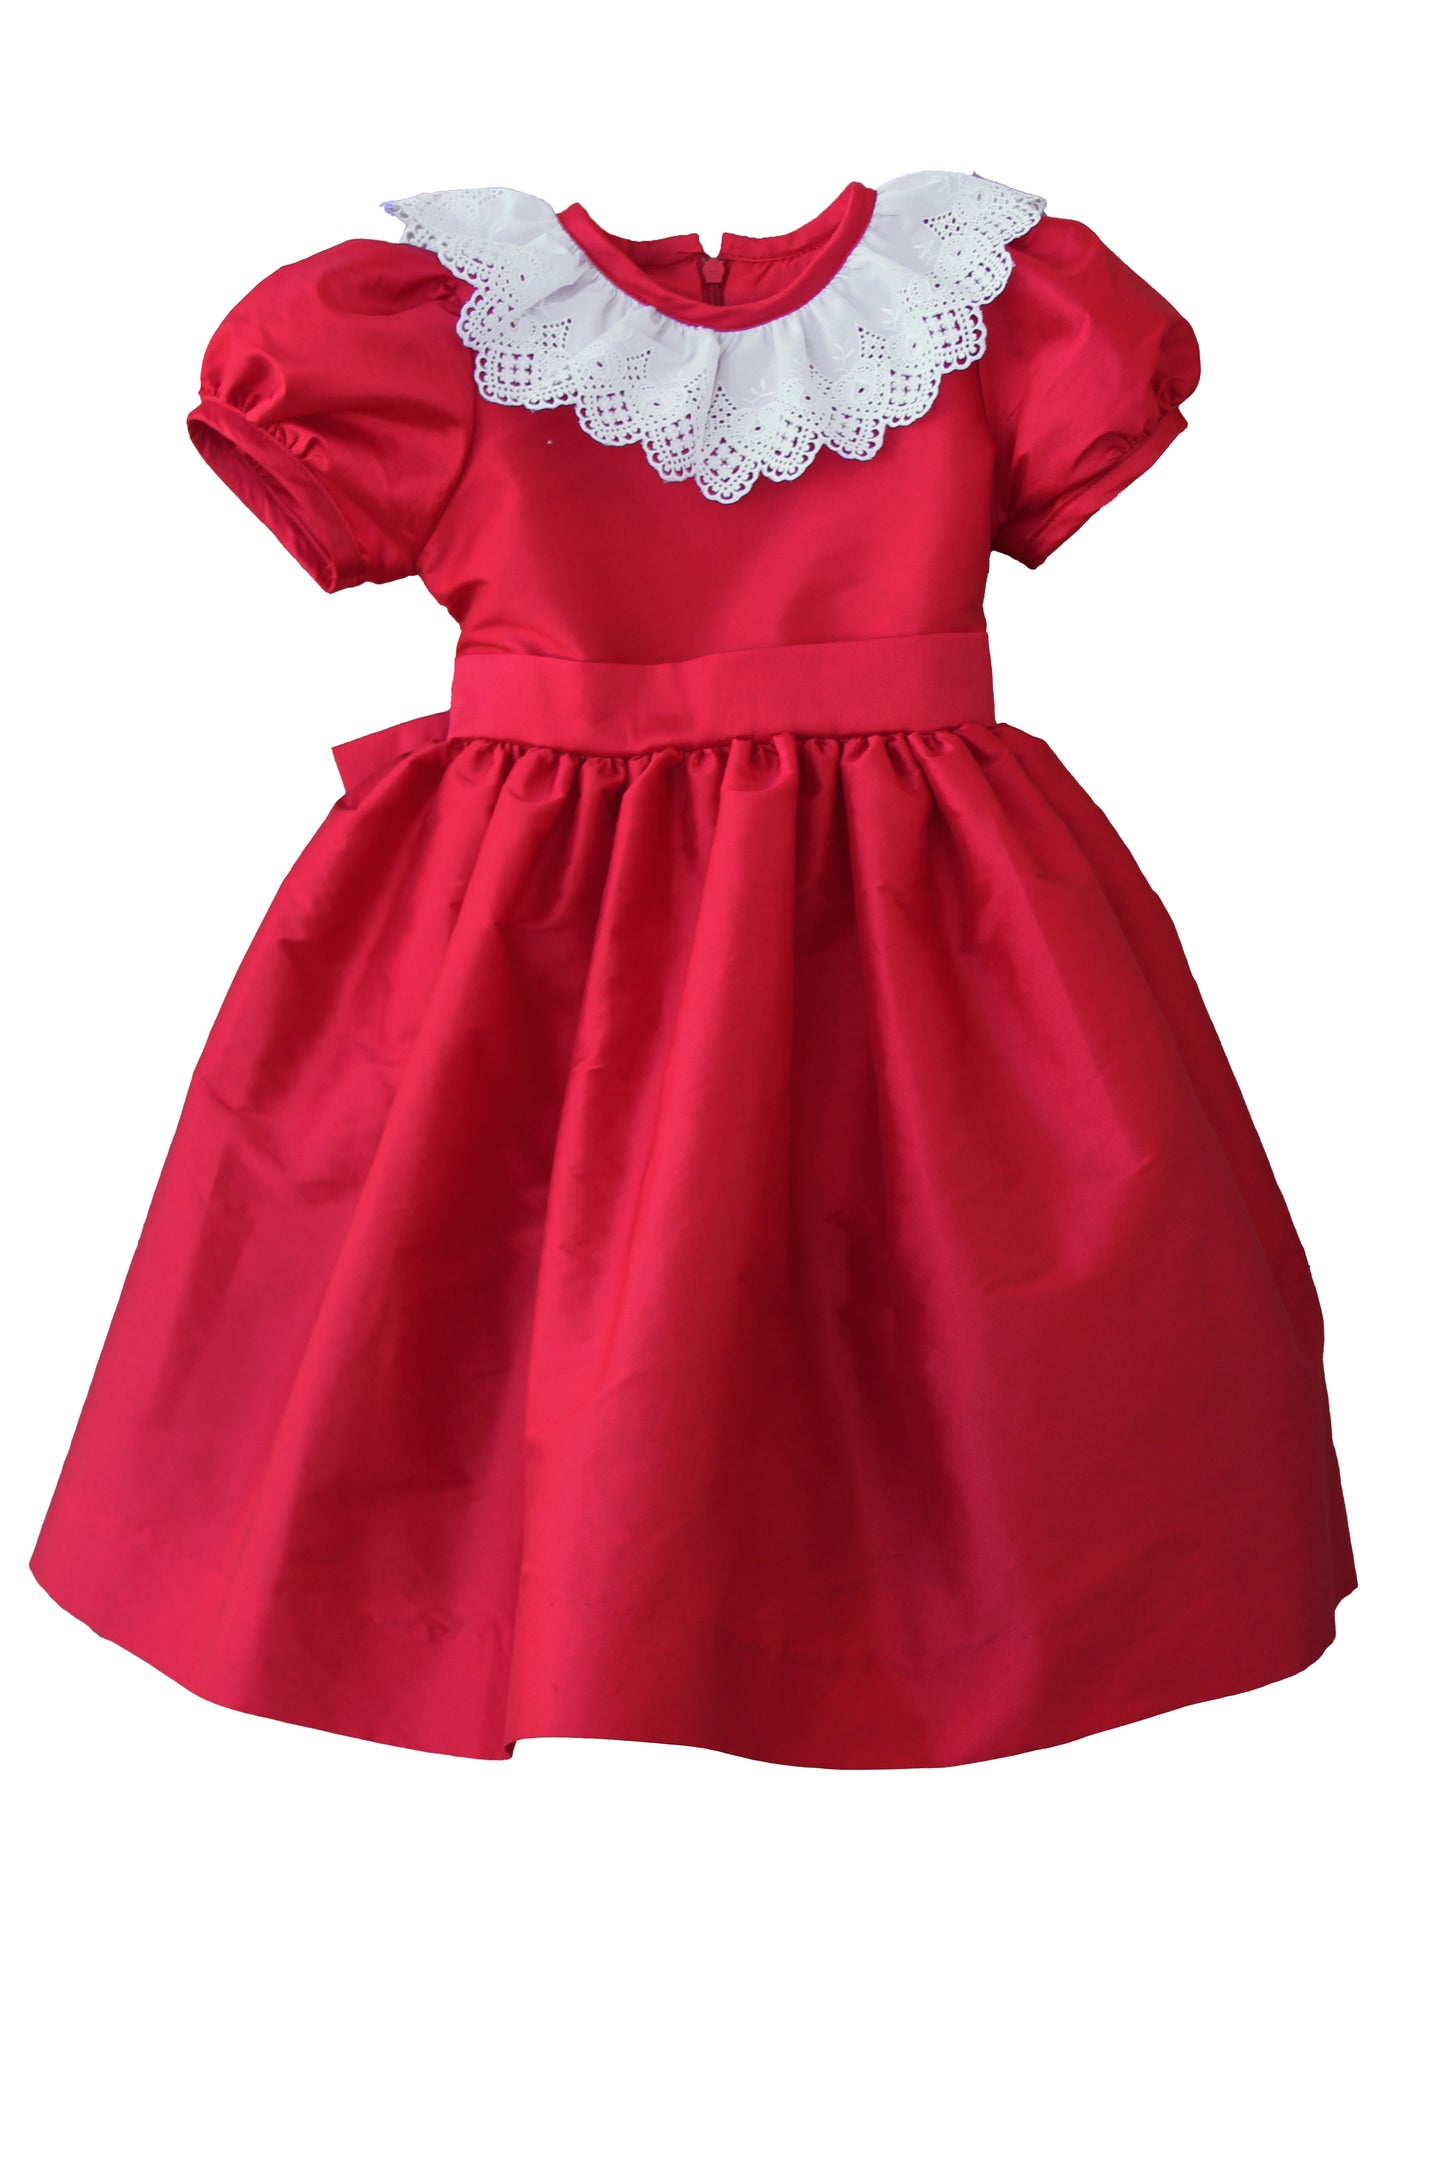 Red Taffeta Lace Collar Dress